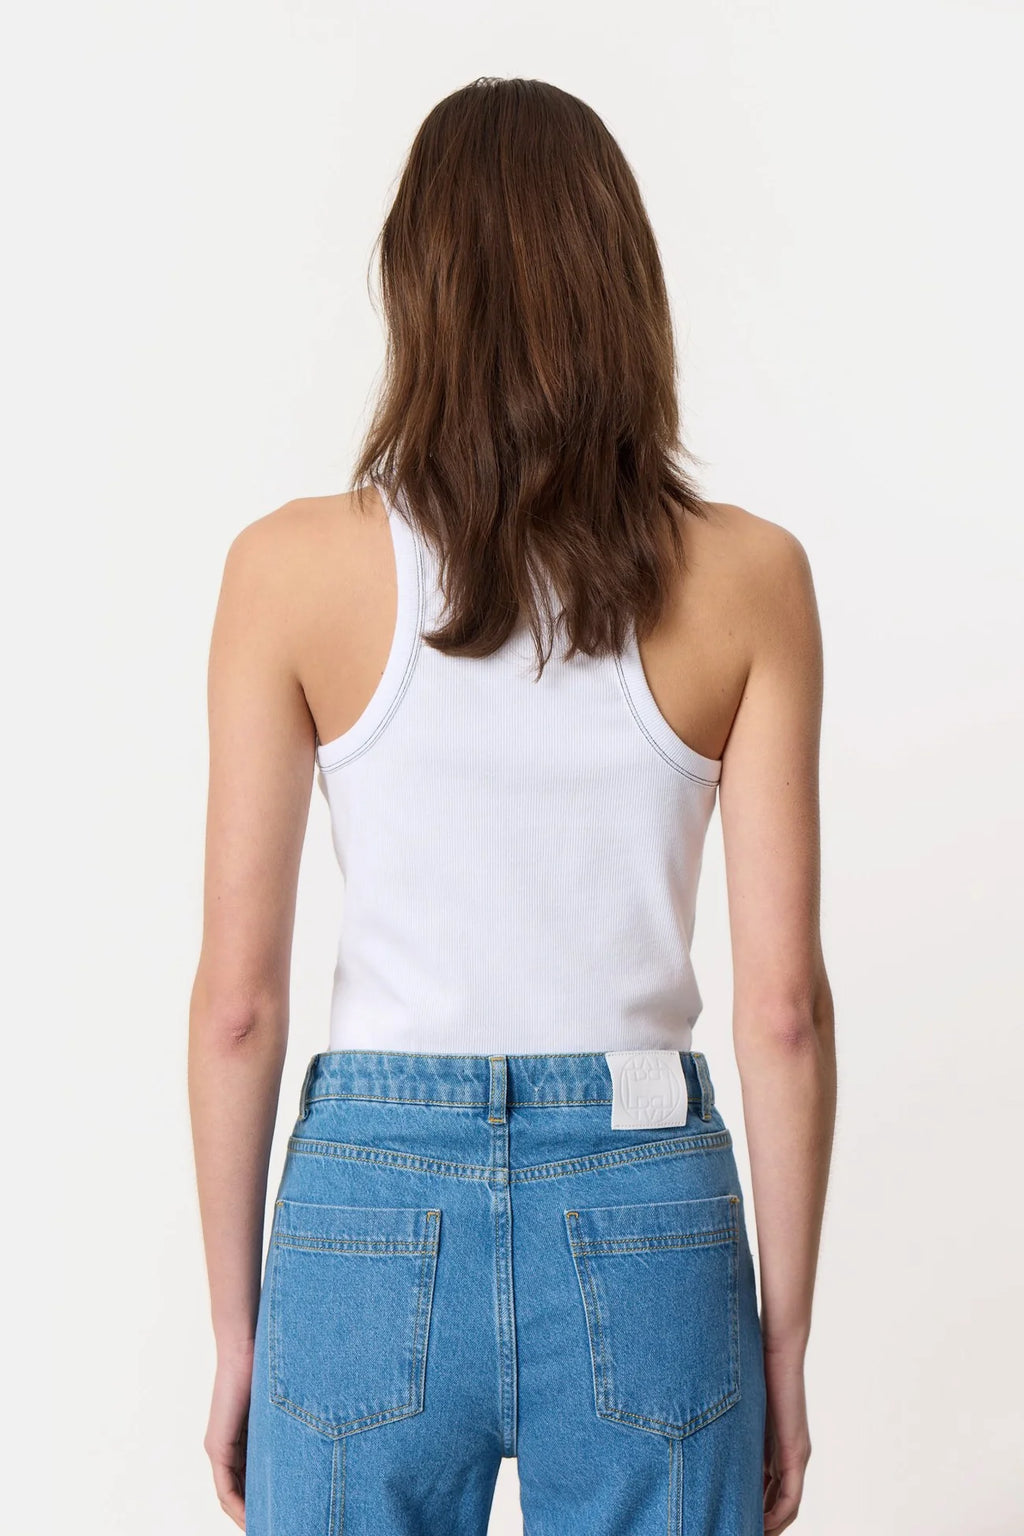 wybzd Women Summer Short Skinny Vest Tops Sleeveless Sheer Mesh Cover Up  See Through Crop Top Grunge Streetwear Silver L 